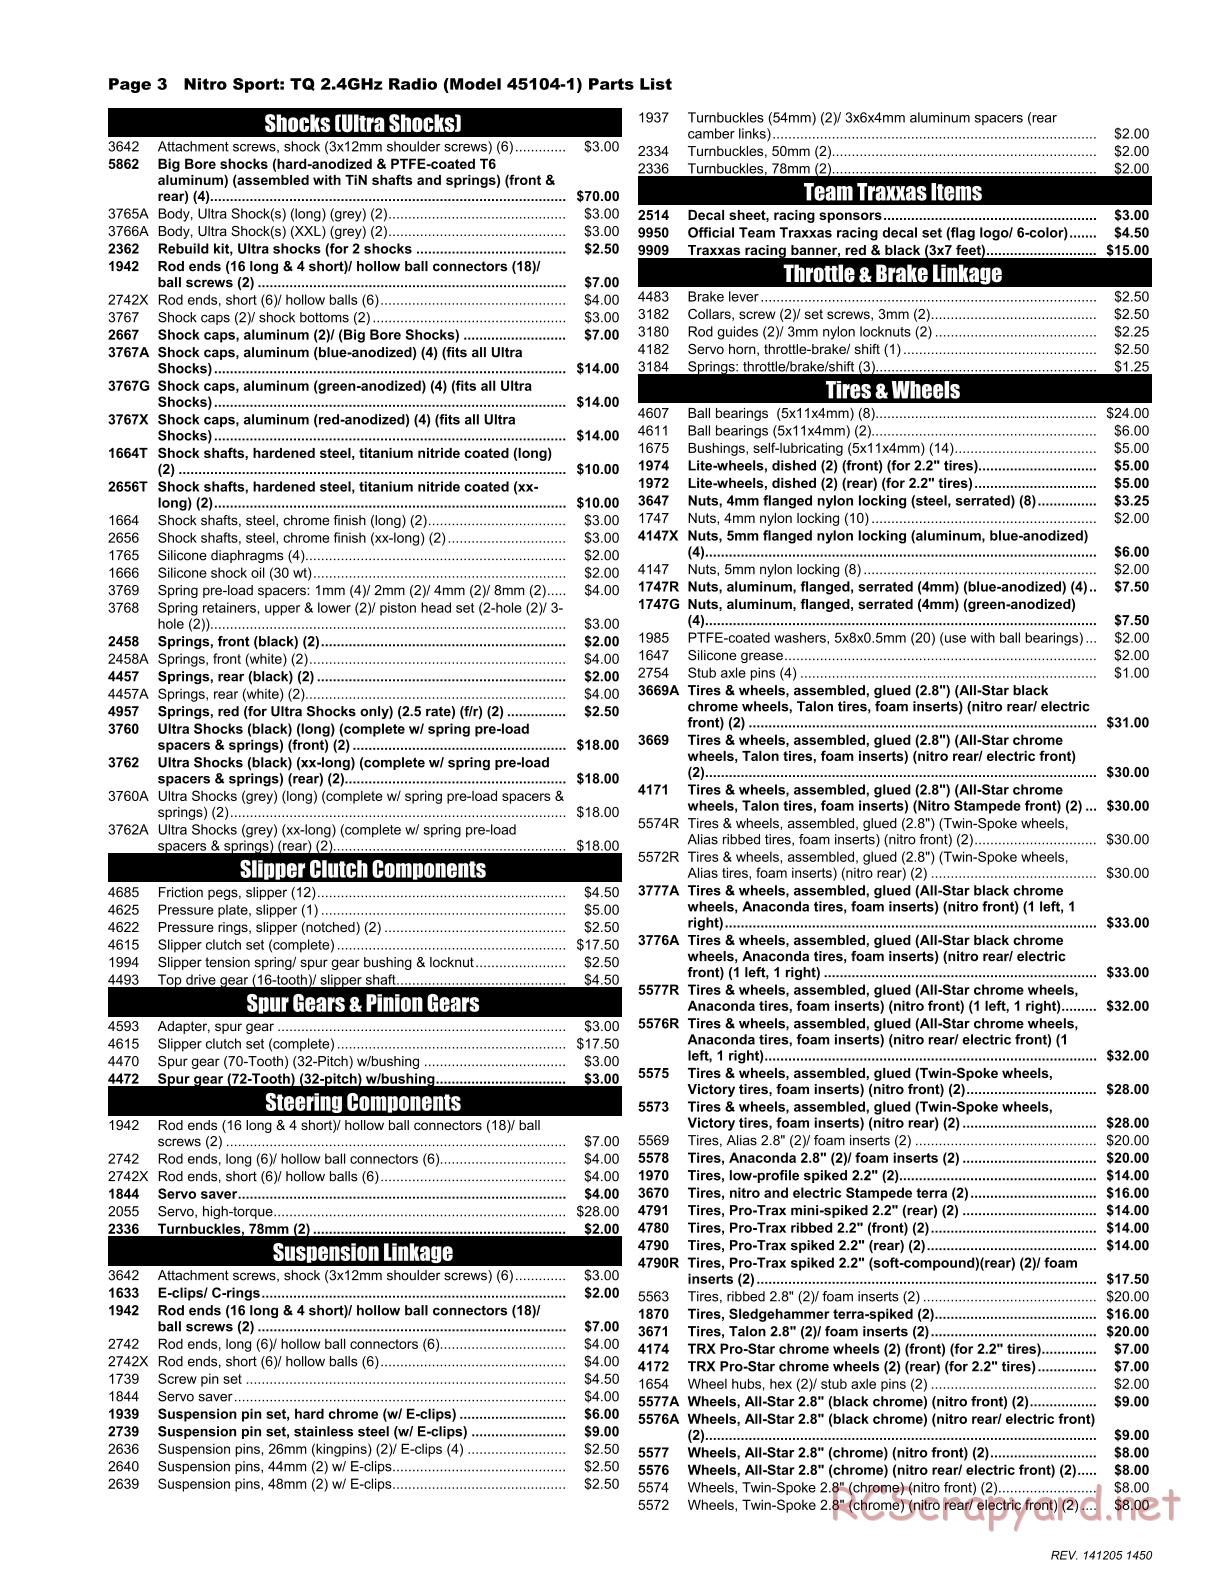 Traxxas - Nitro Sport (2015) - Parts List - Page 3